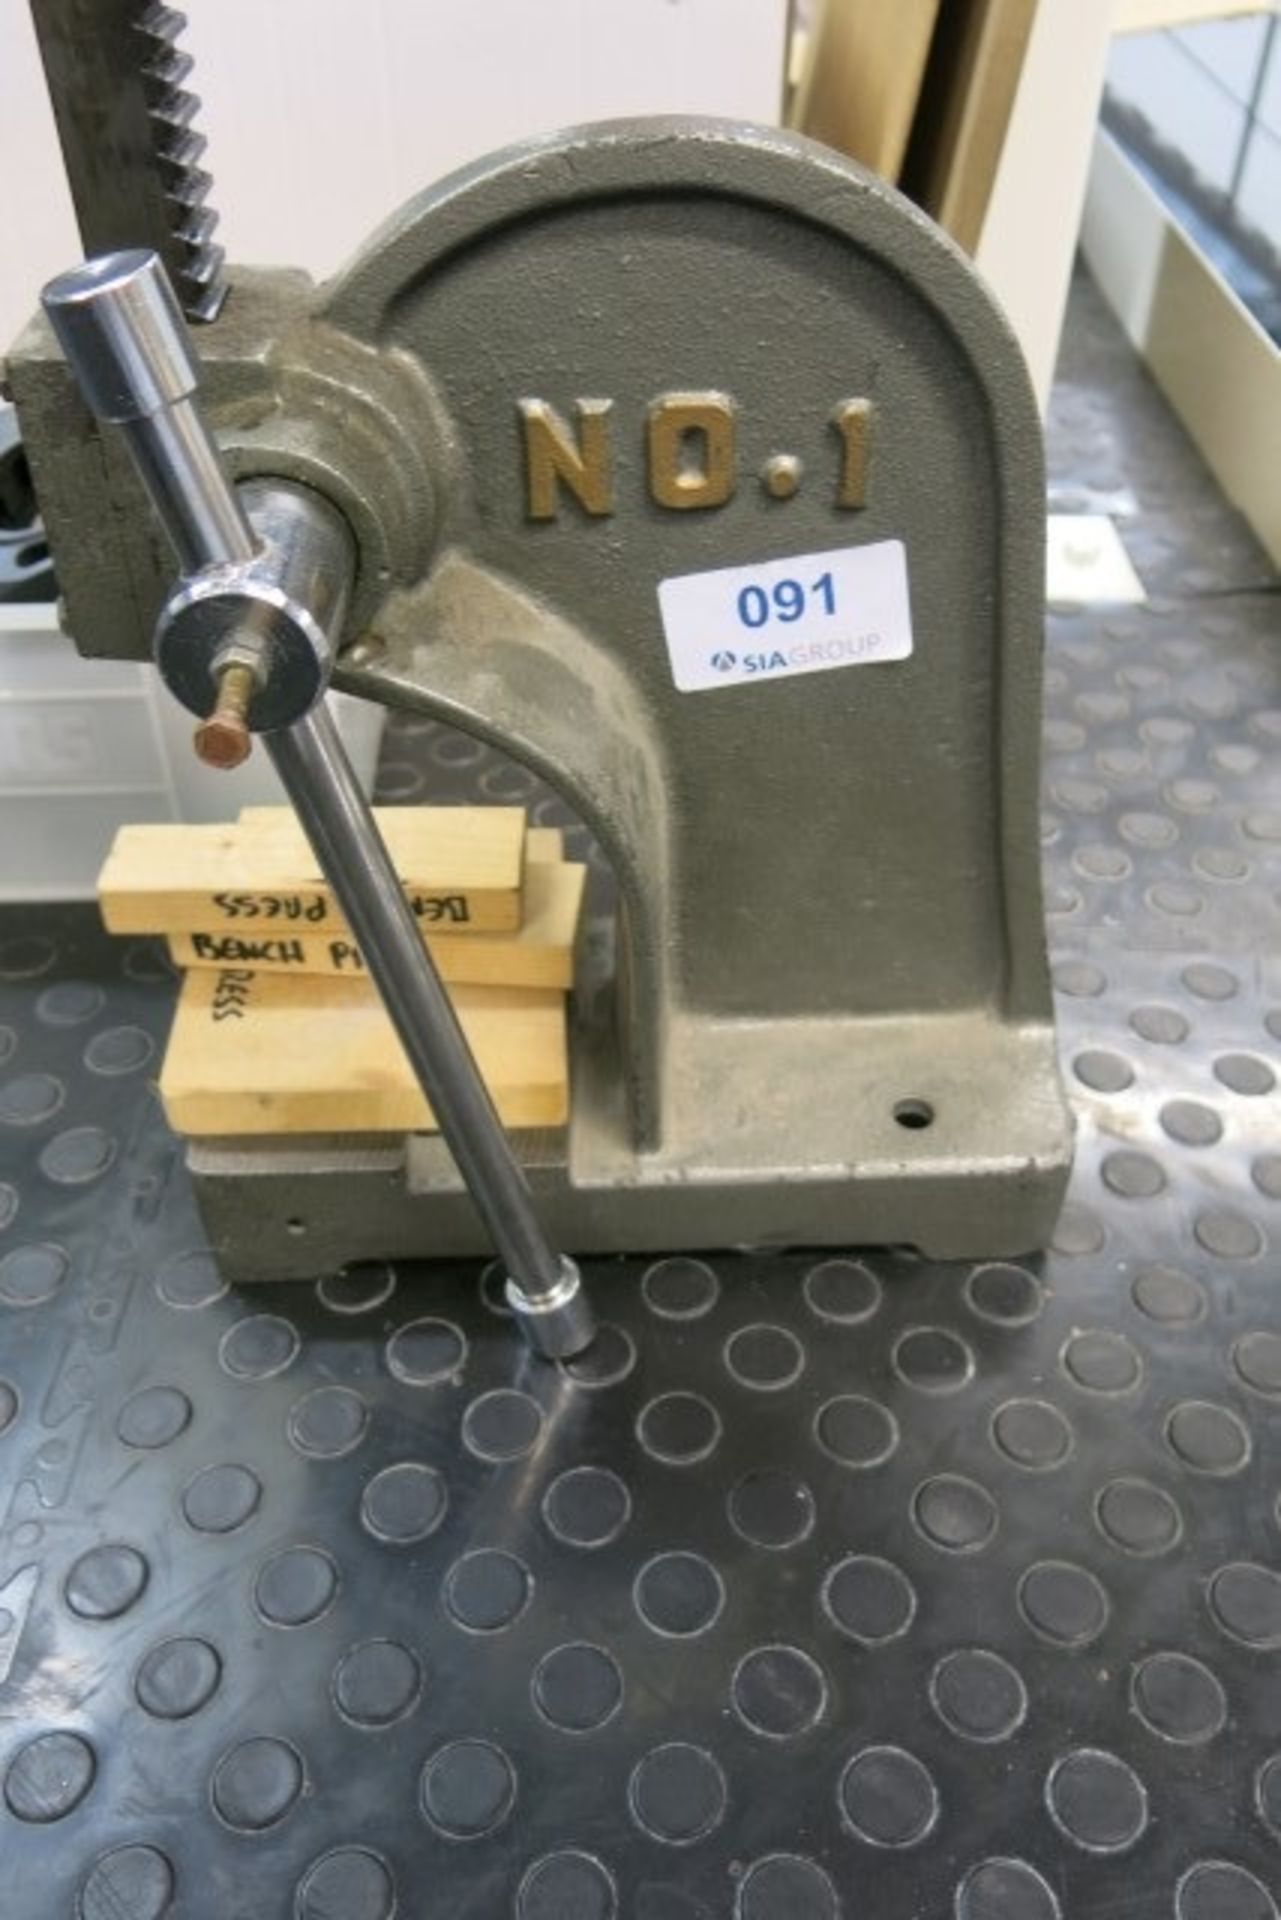 No 1 manual arbor press